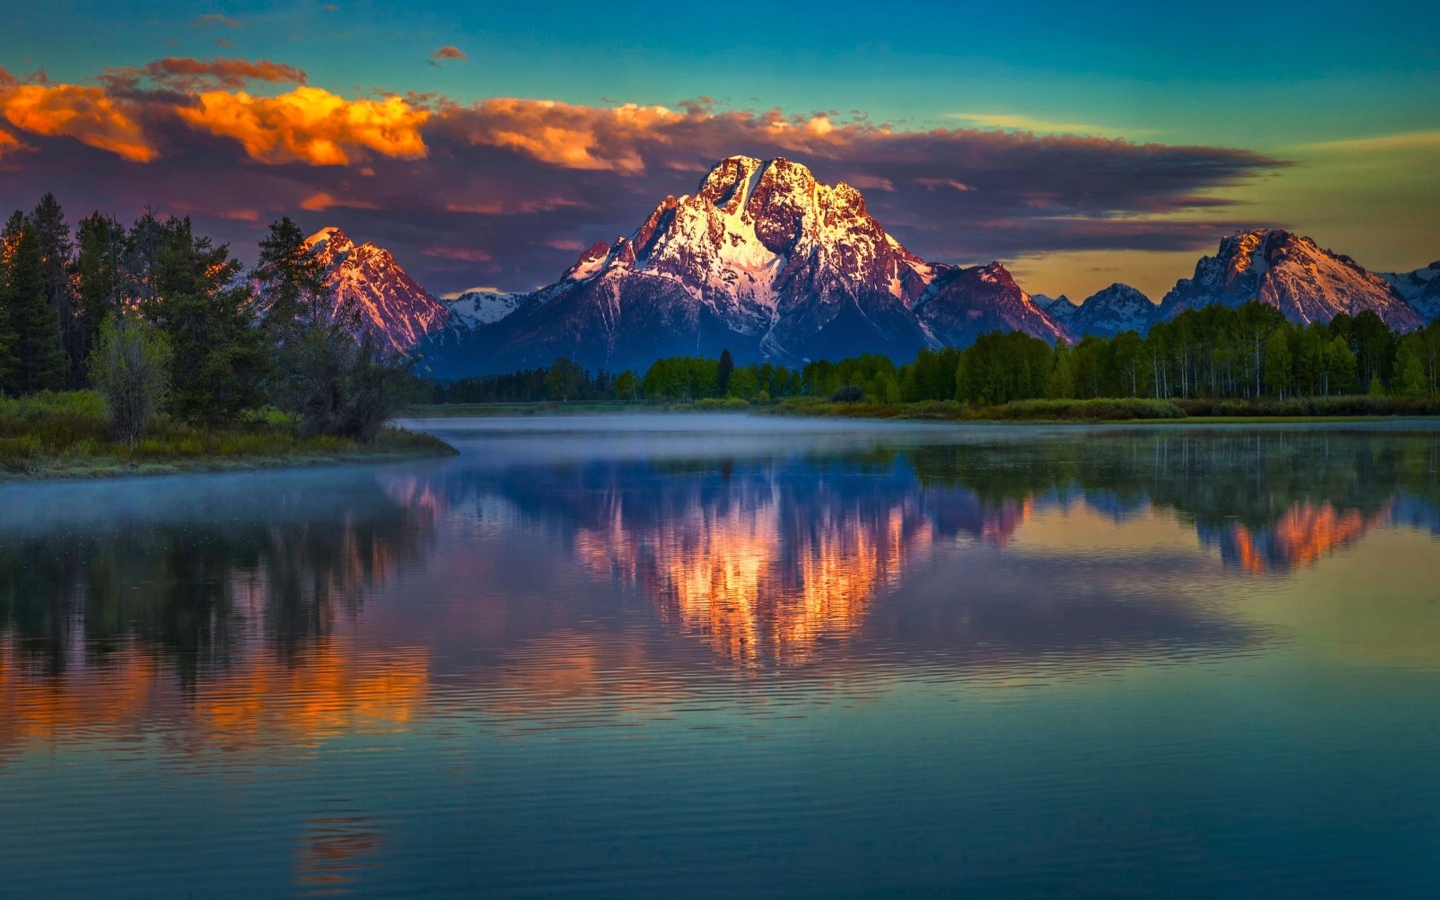 1440x900-dramatic-mountain-reflection-over-lake-1440x900-wallpaper-hd